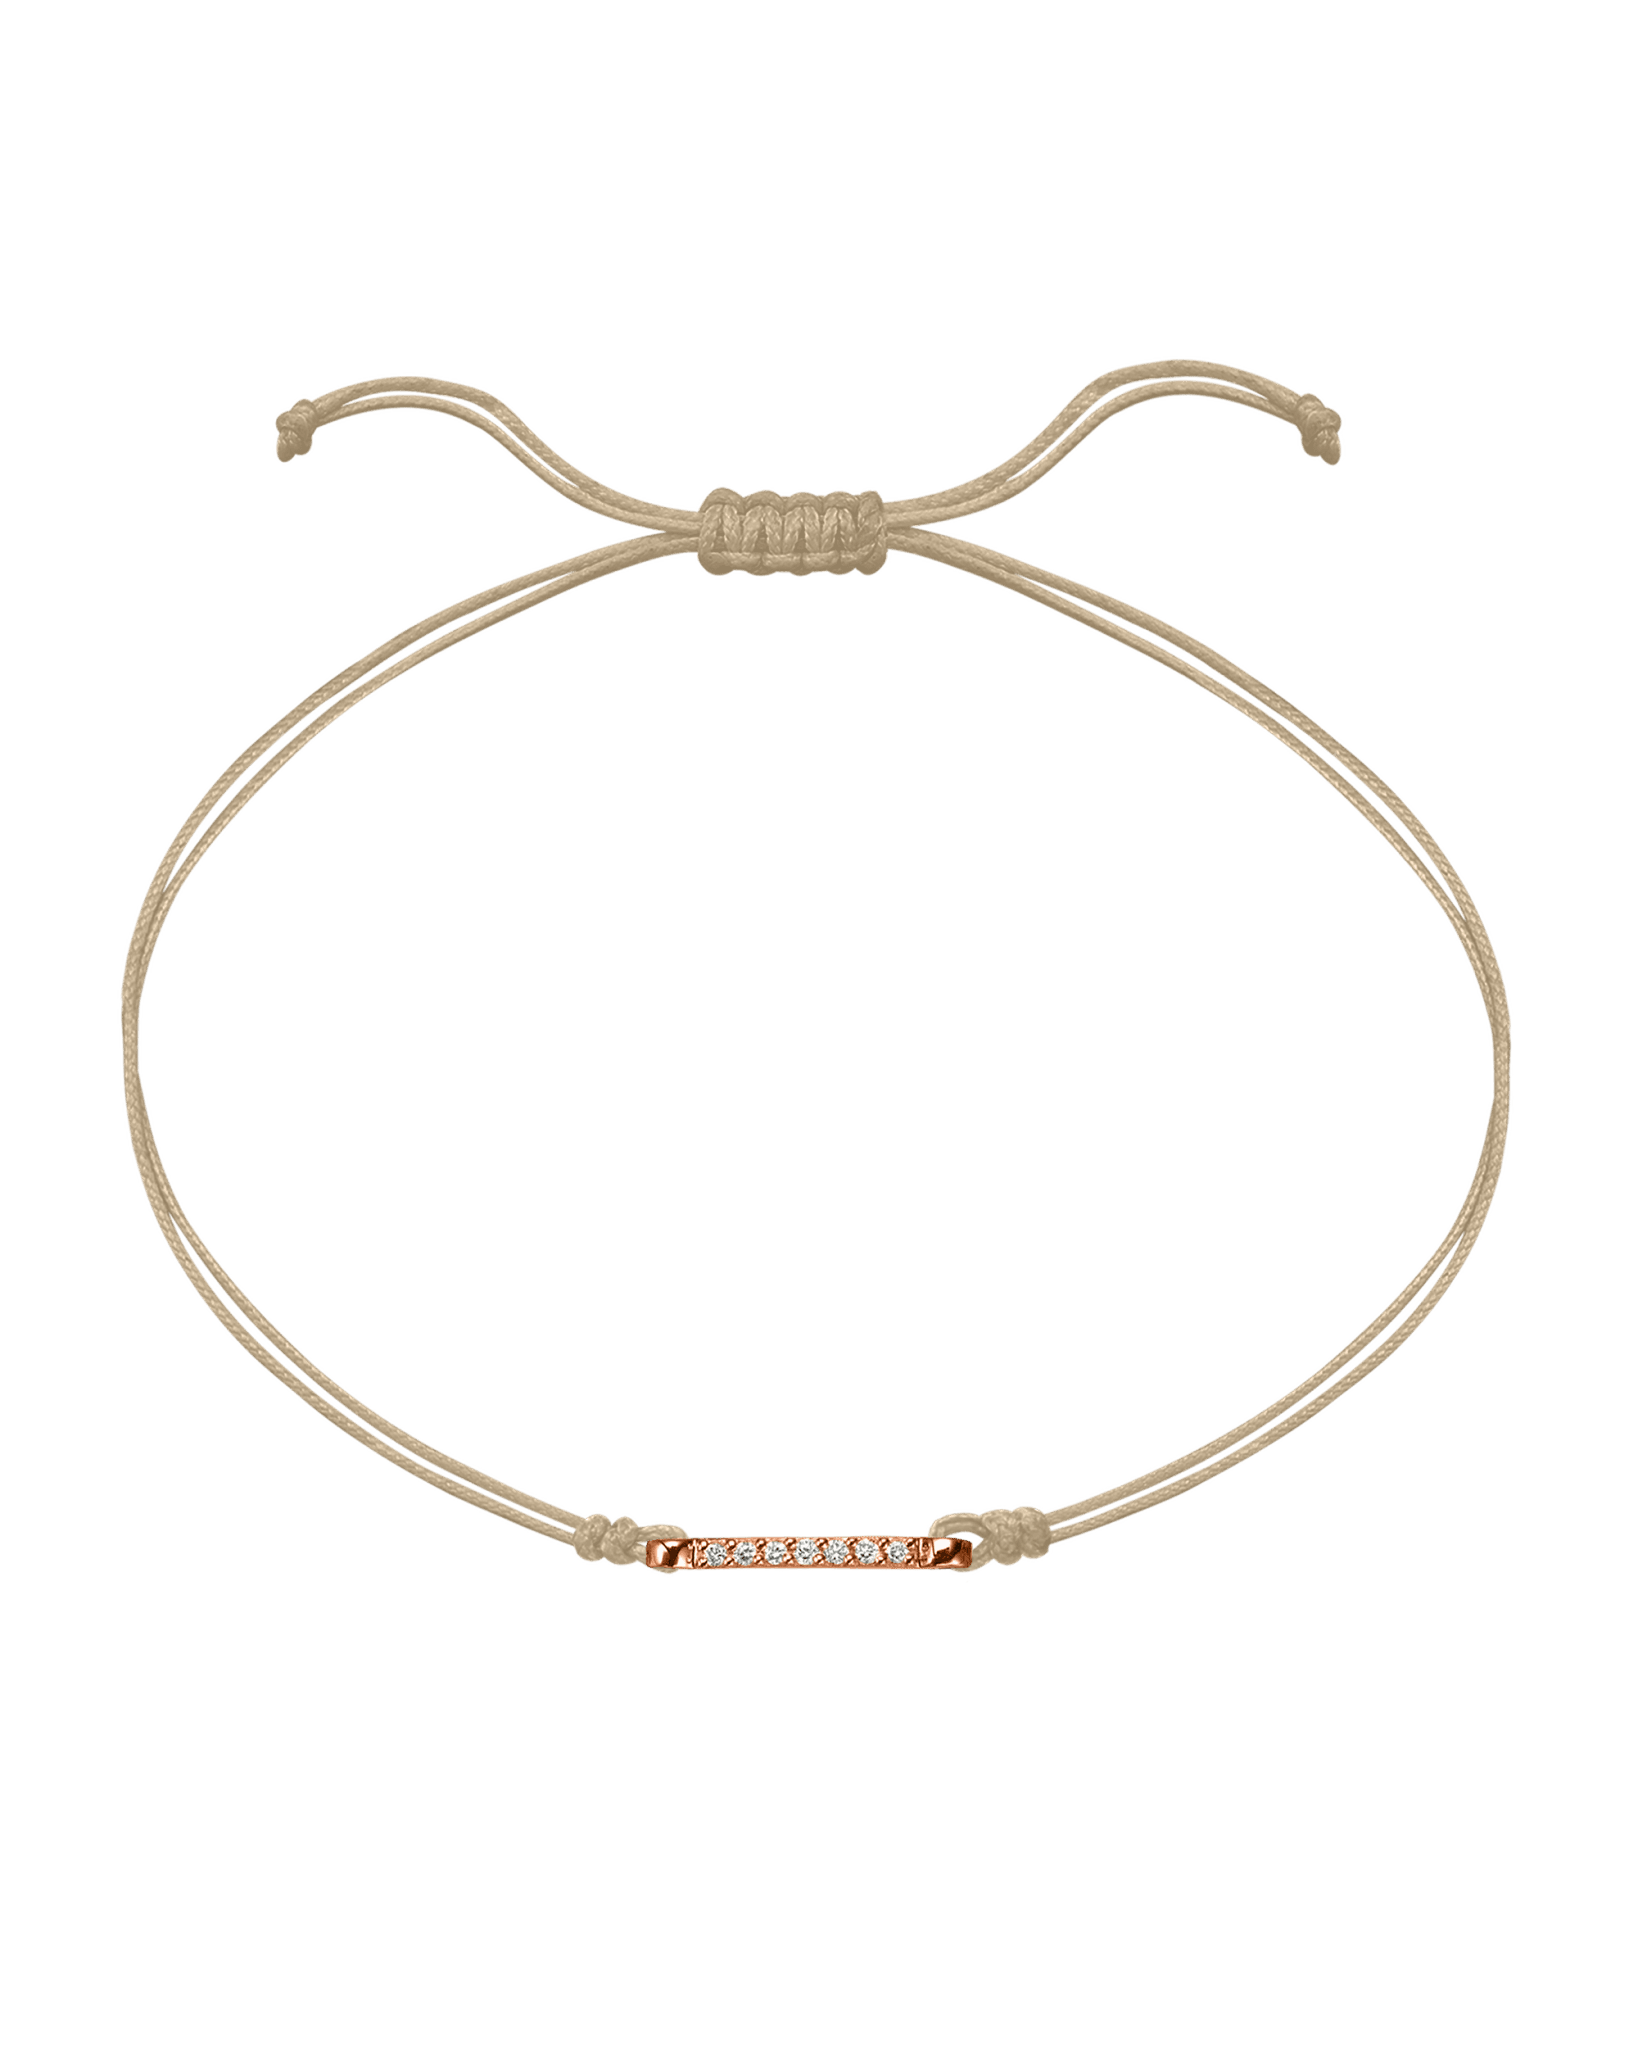 The Diamond Bar String Of Love - 14K Rose Gold Bracelet 14K Solid Gold Beige 